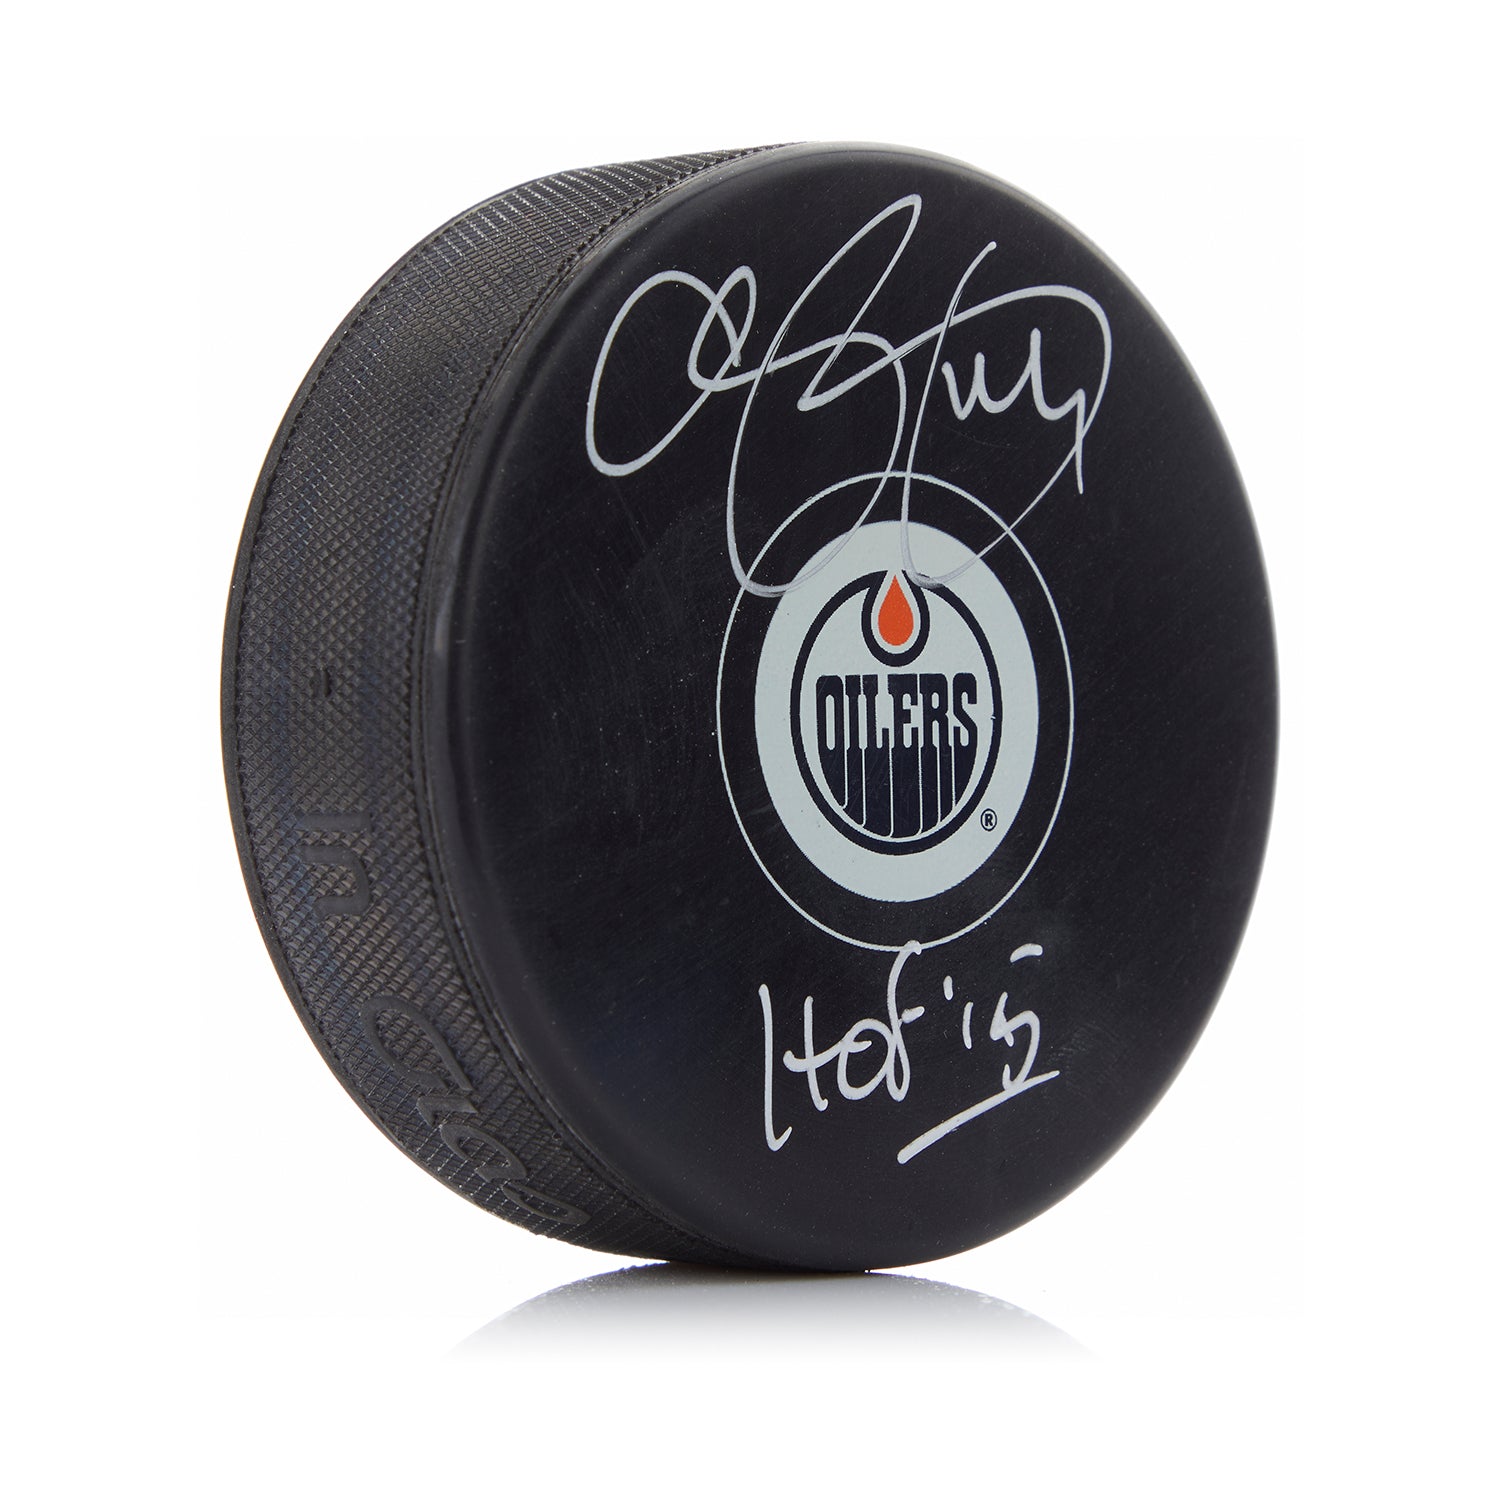 Chris Pronger Autographed Edmonton Oilers Puck with HOF Note